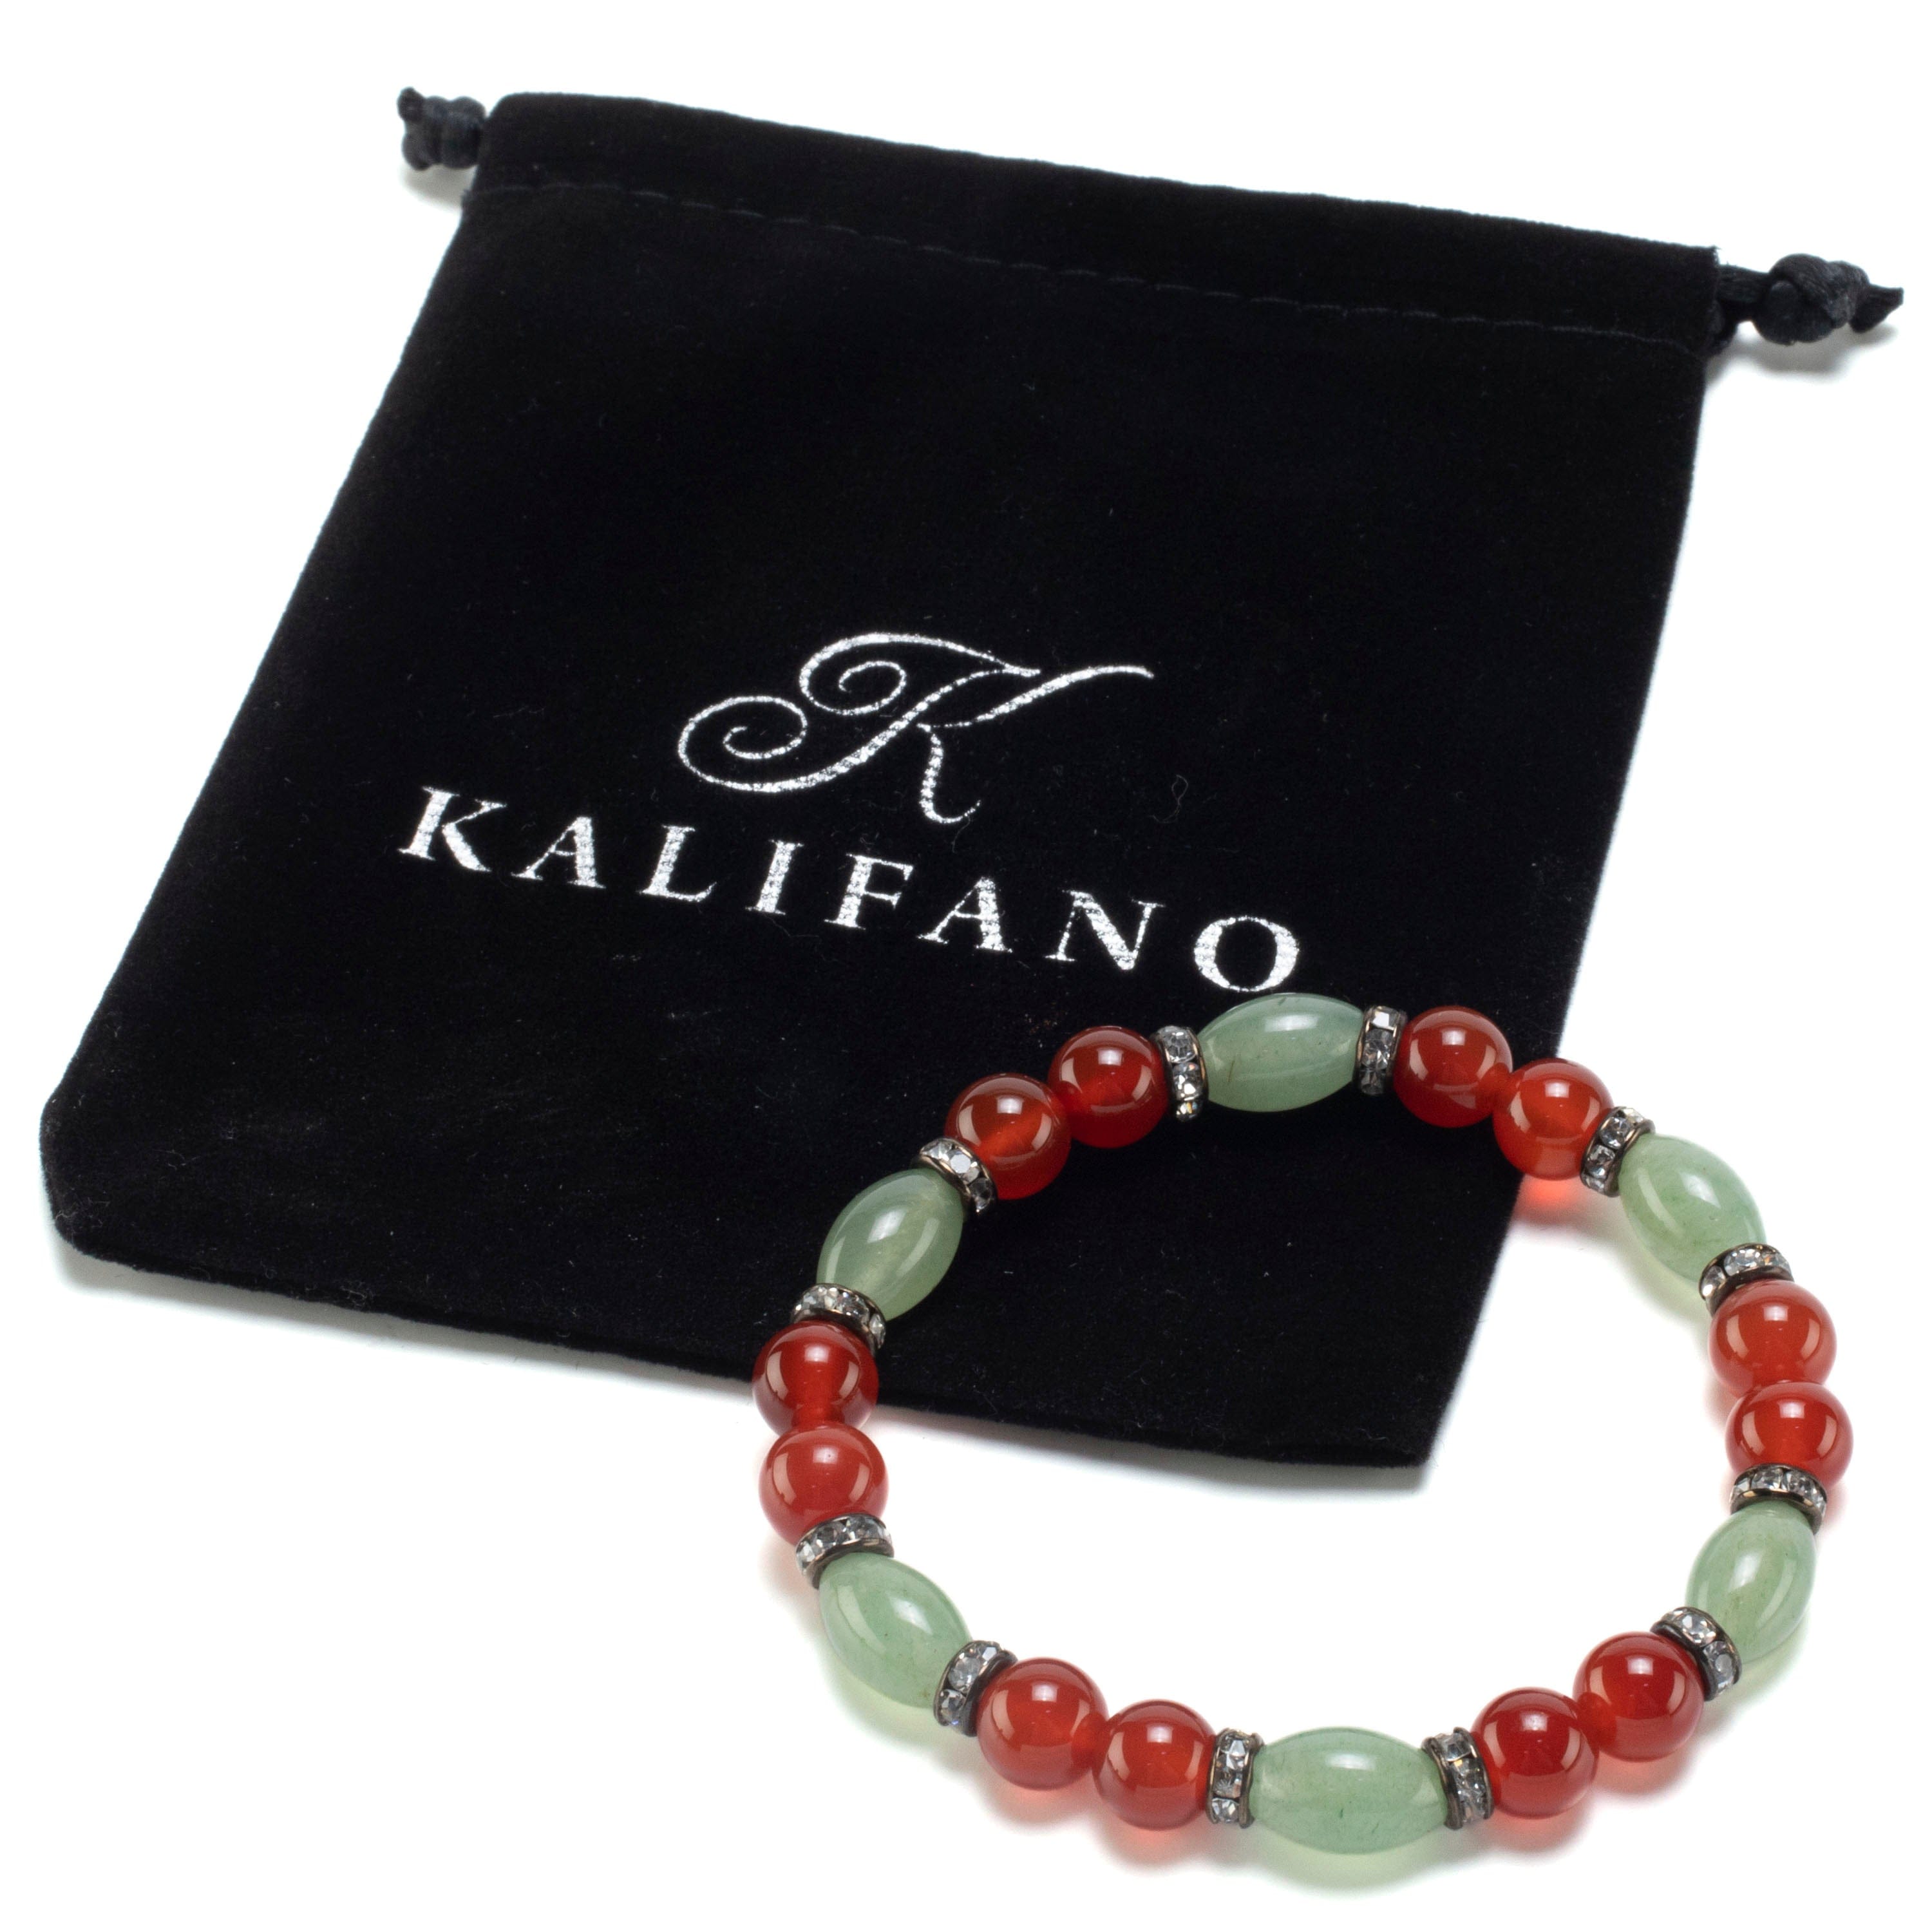 Kalifano Gemstone Bracelets Oval Aventurine and Round Carnelian with Crystal Accent Beads Gemstone Elastic Bracelet BLUE-BGP-005